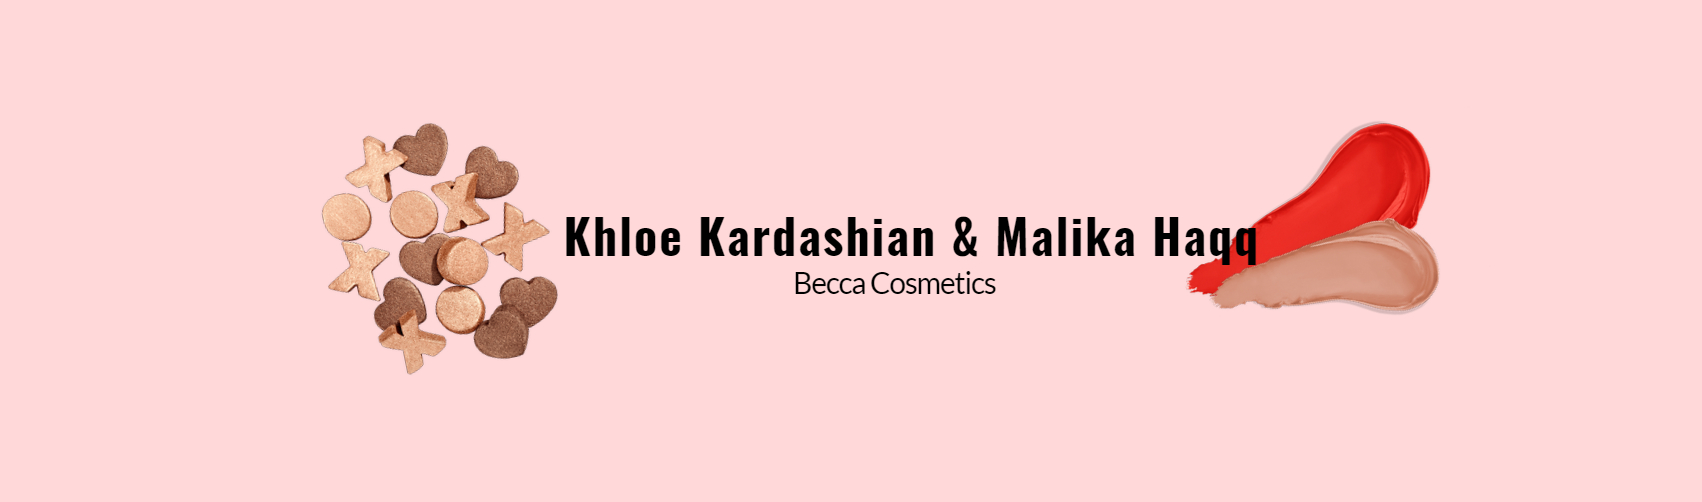 Khloe Kardashian and Malika Haqq have teamed up on a makeup collection.